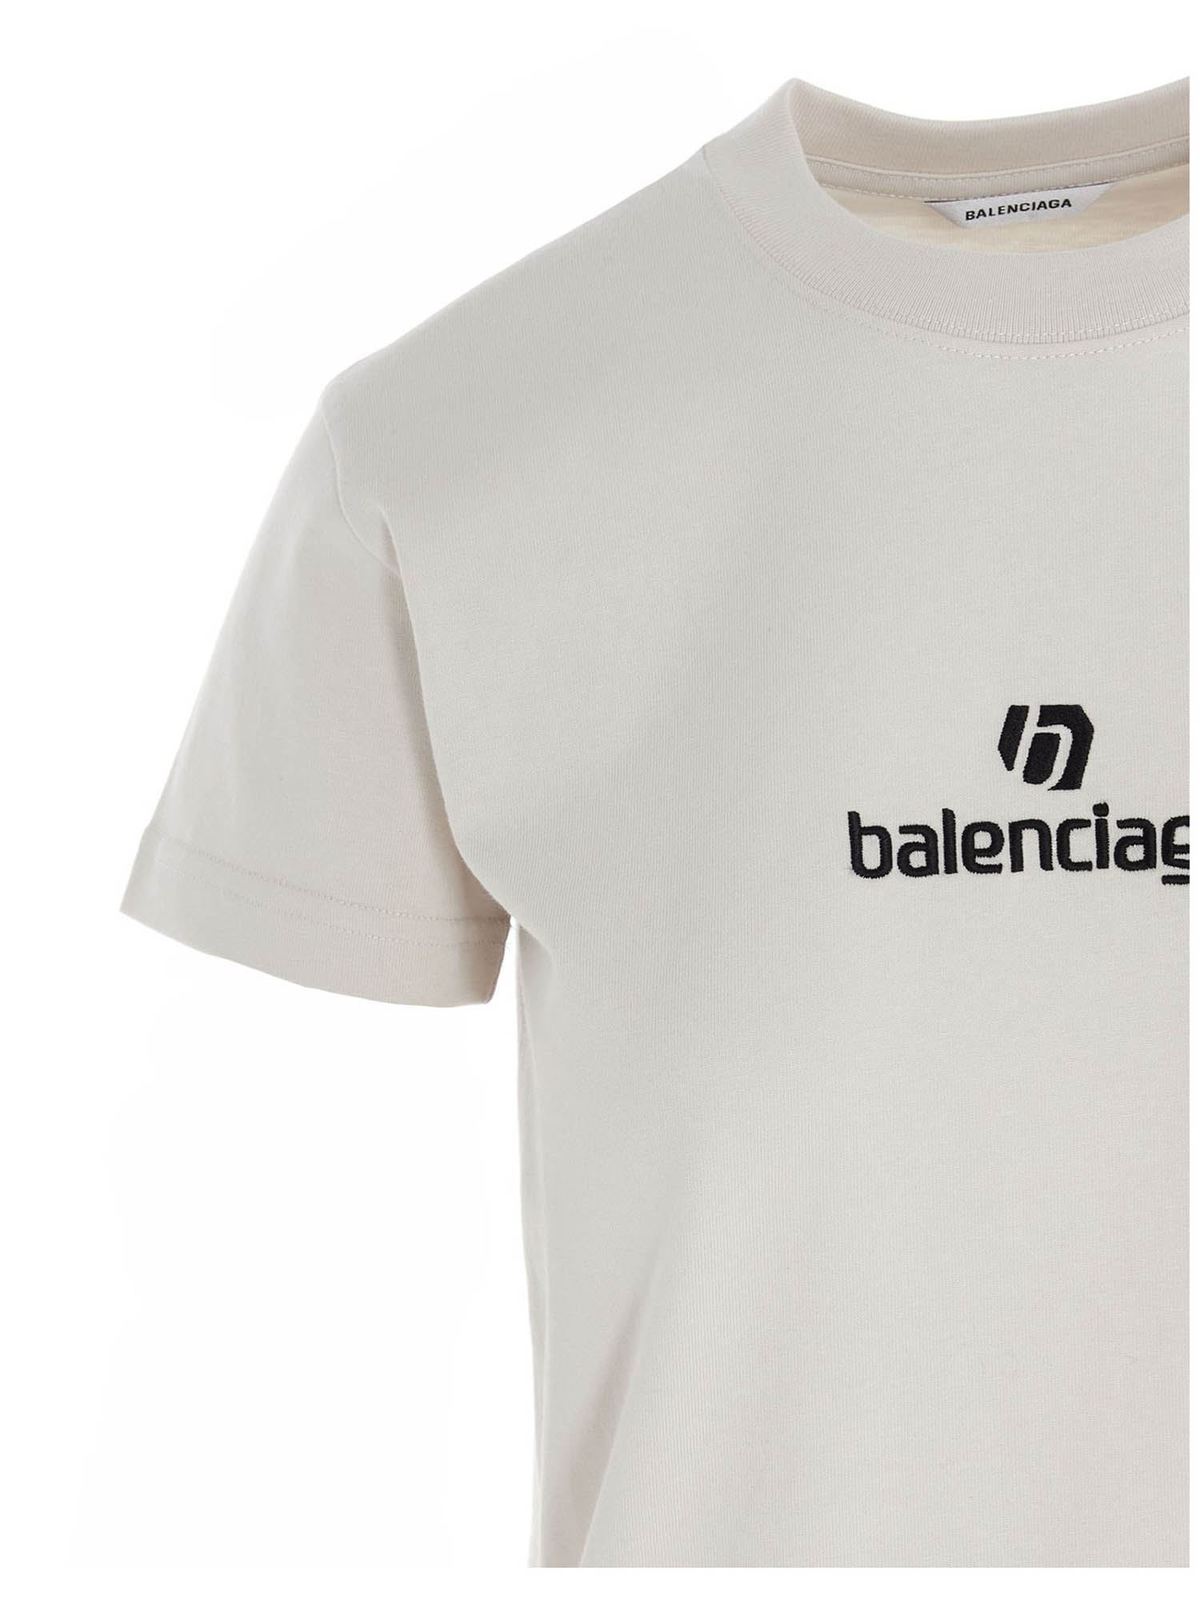 this is the new balenciaga logo t shirt